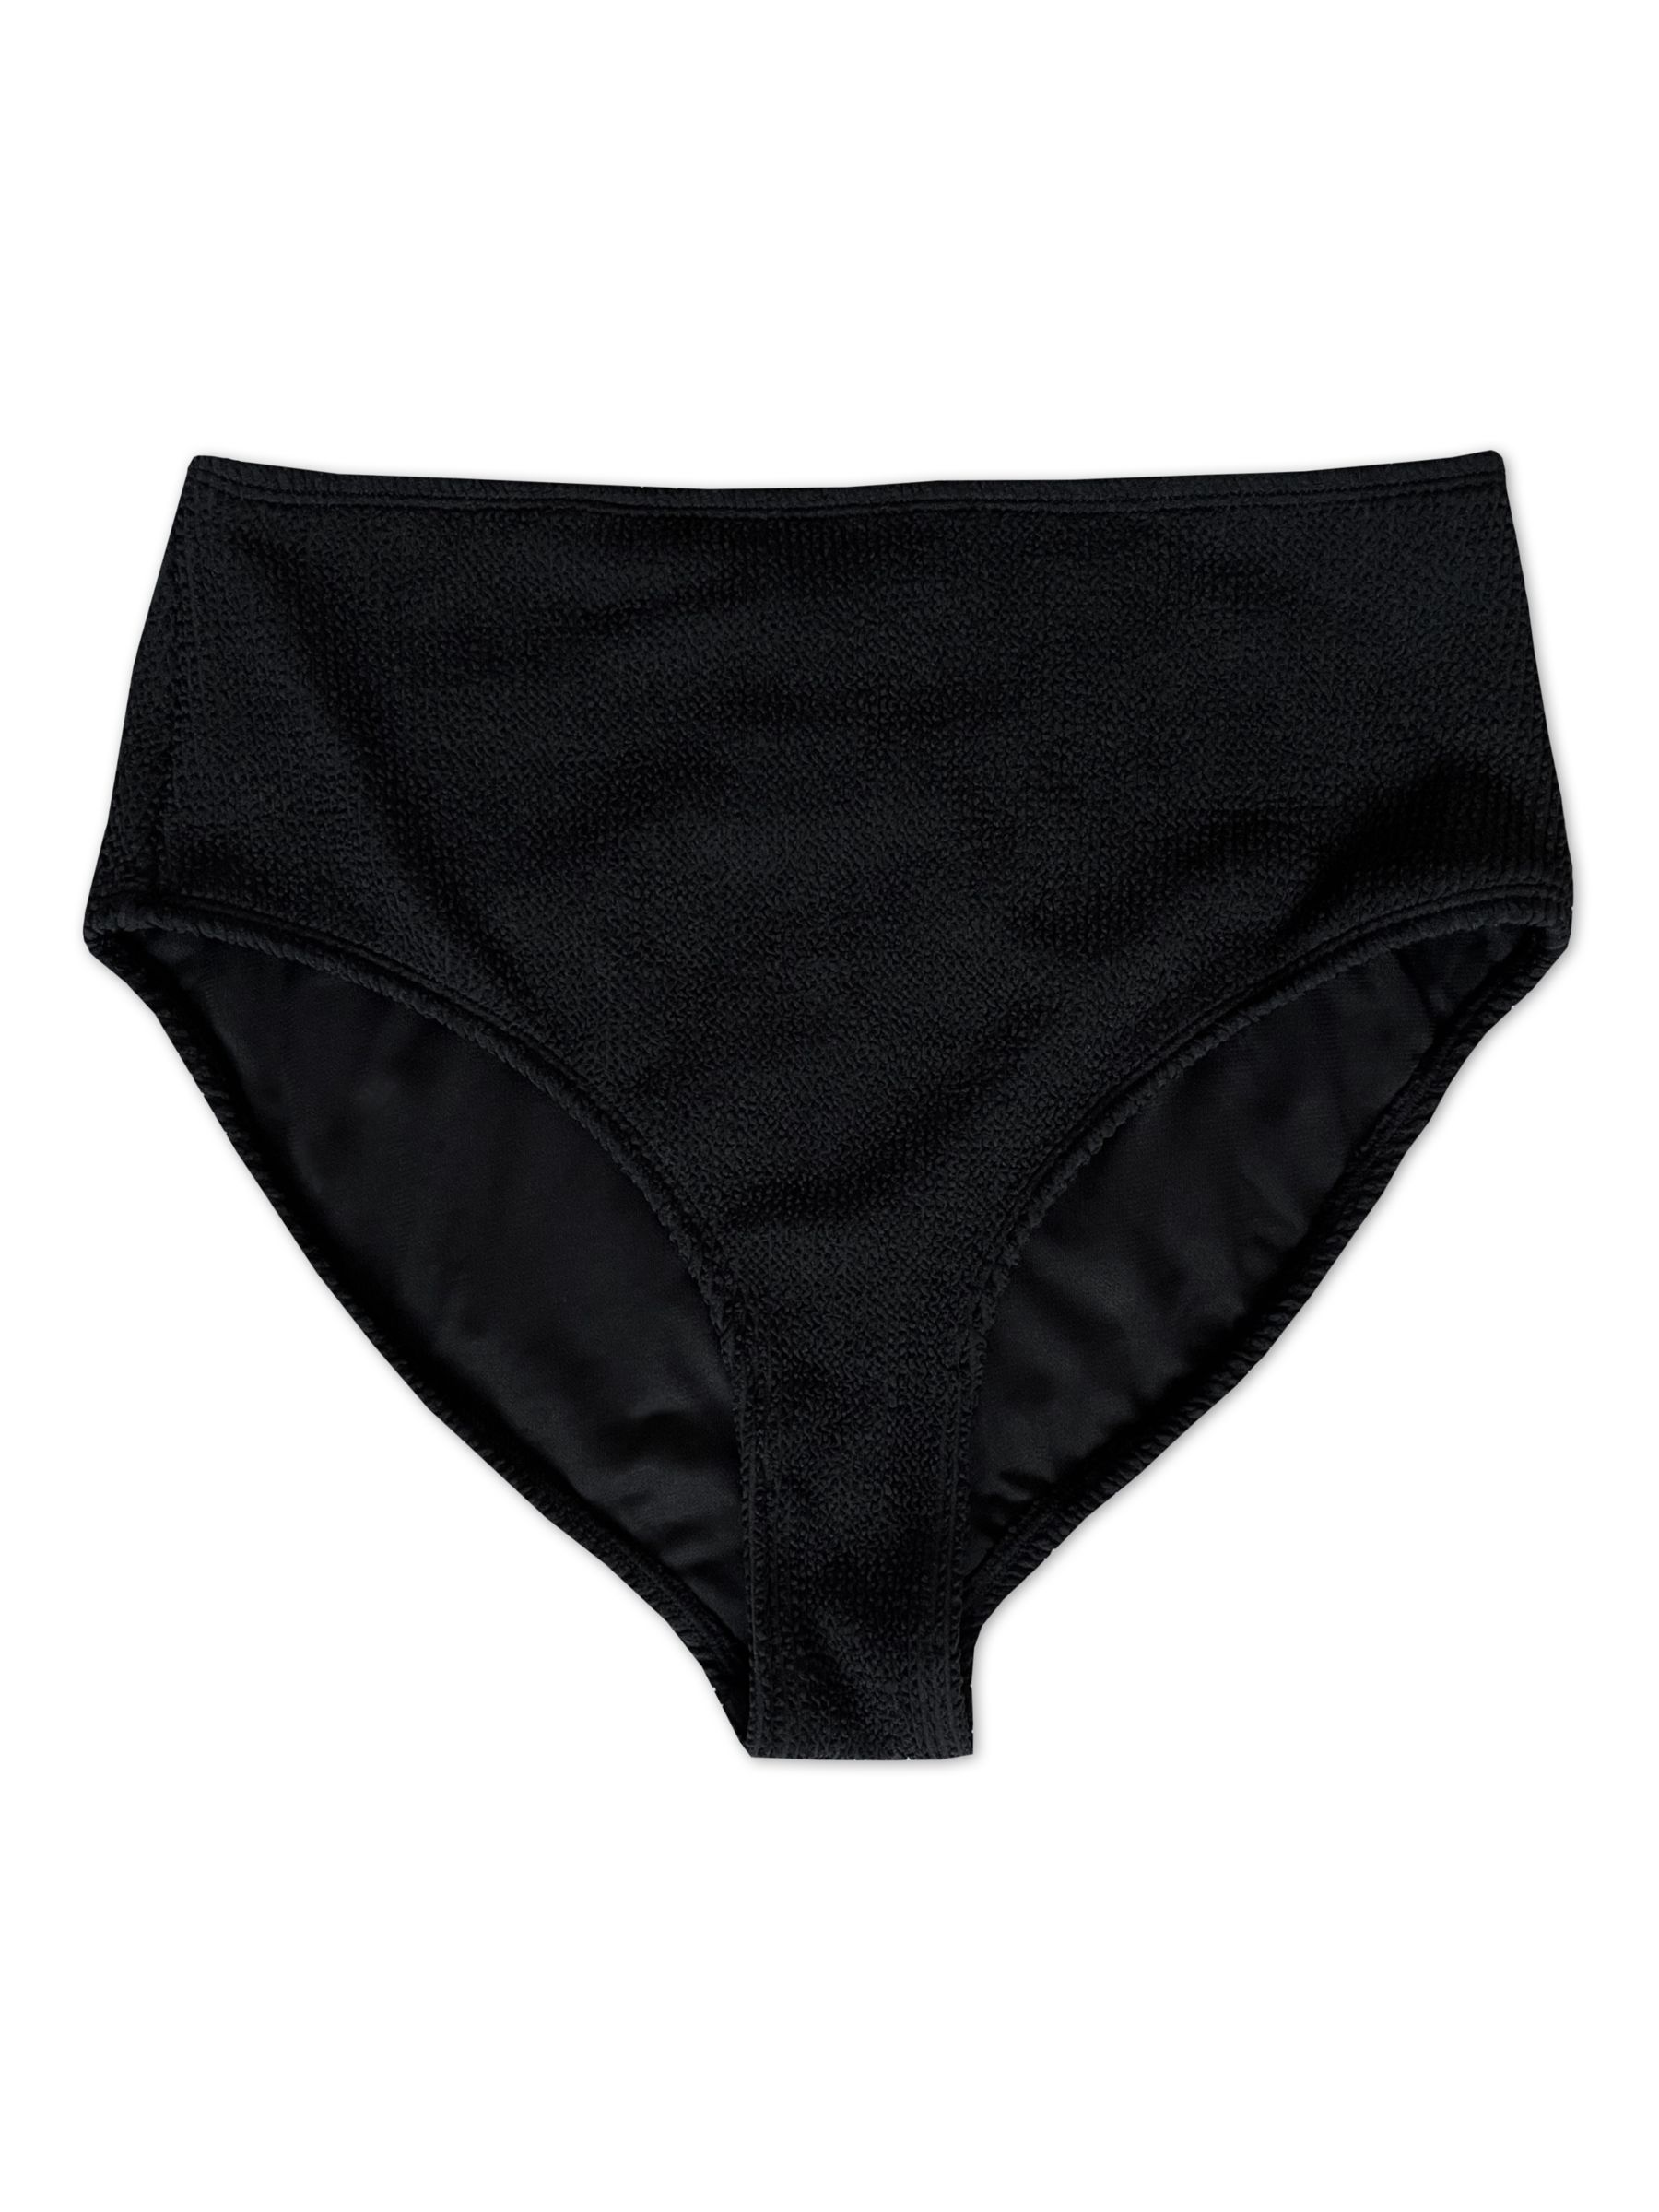 Albaray Ribbed Bikini Bottoms, Black, 14